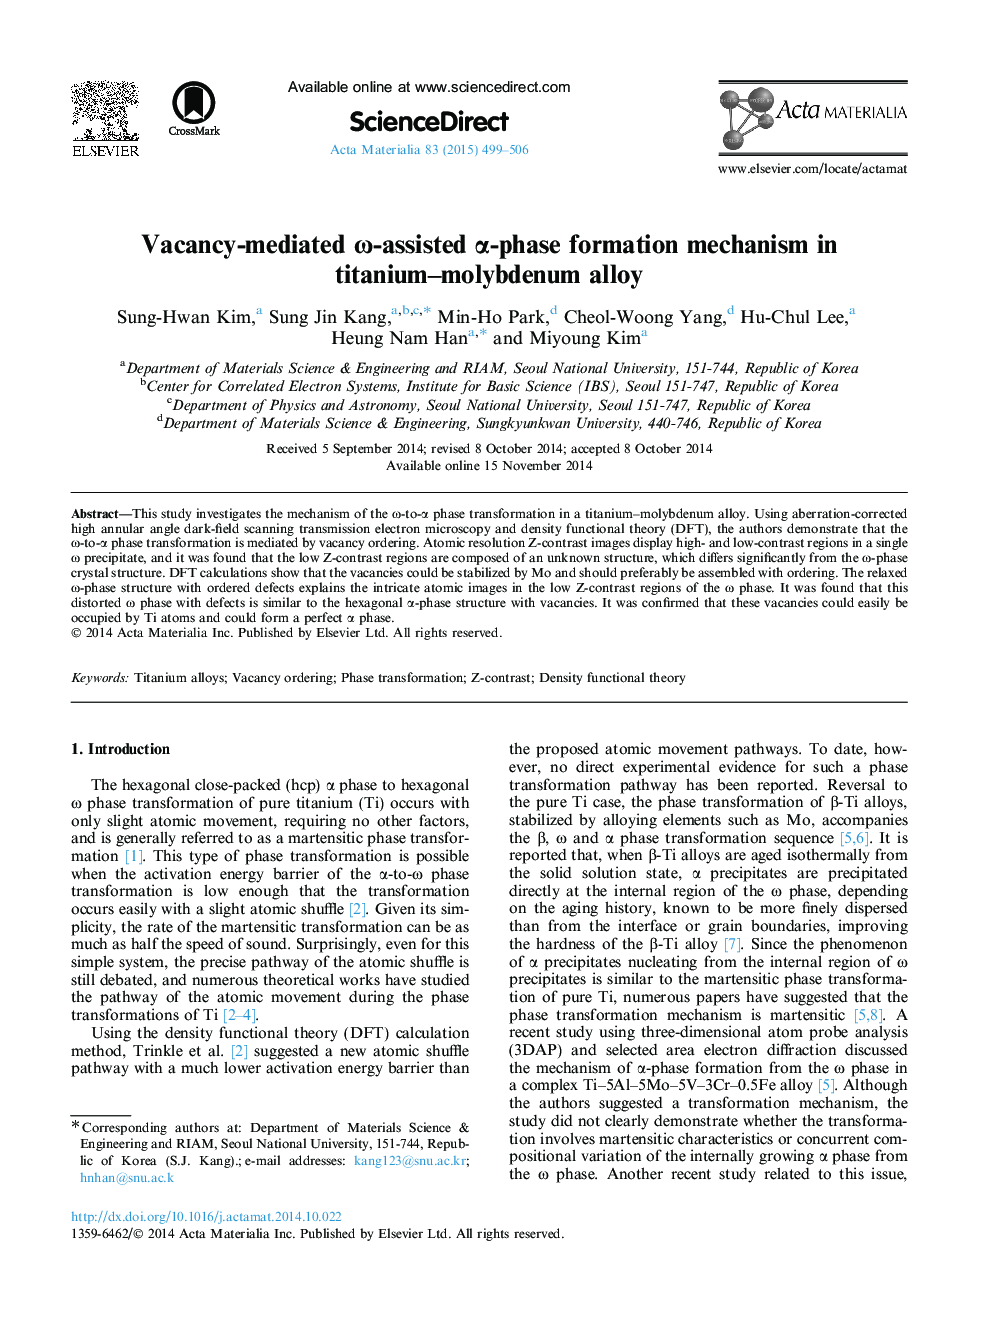 Vacancy-mediated Ï-assisted Î±-phase formation mechanism in titanium-molybdenum alloy